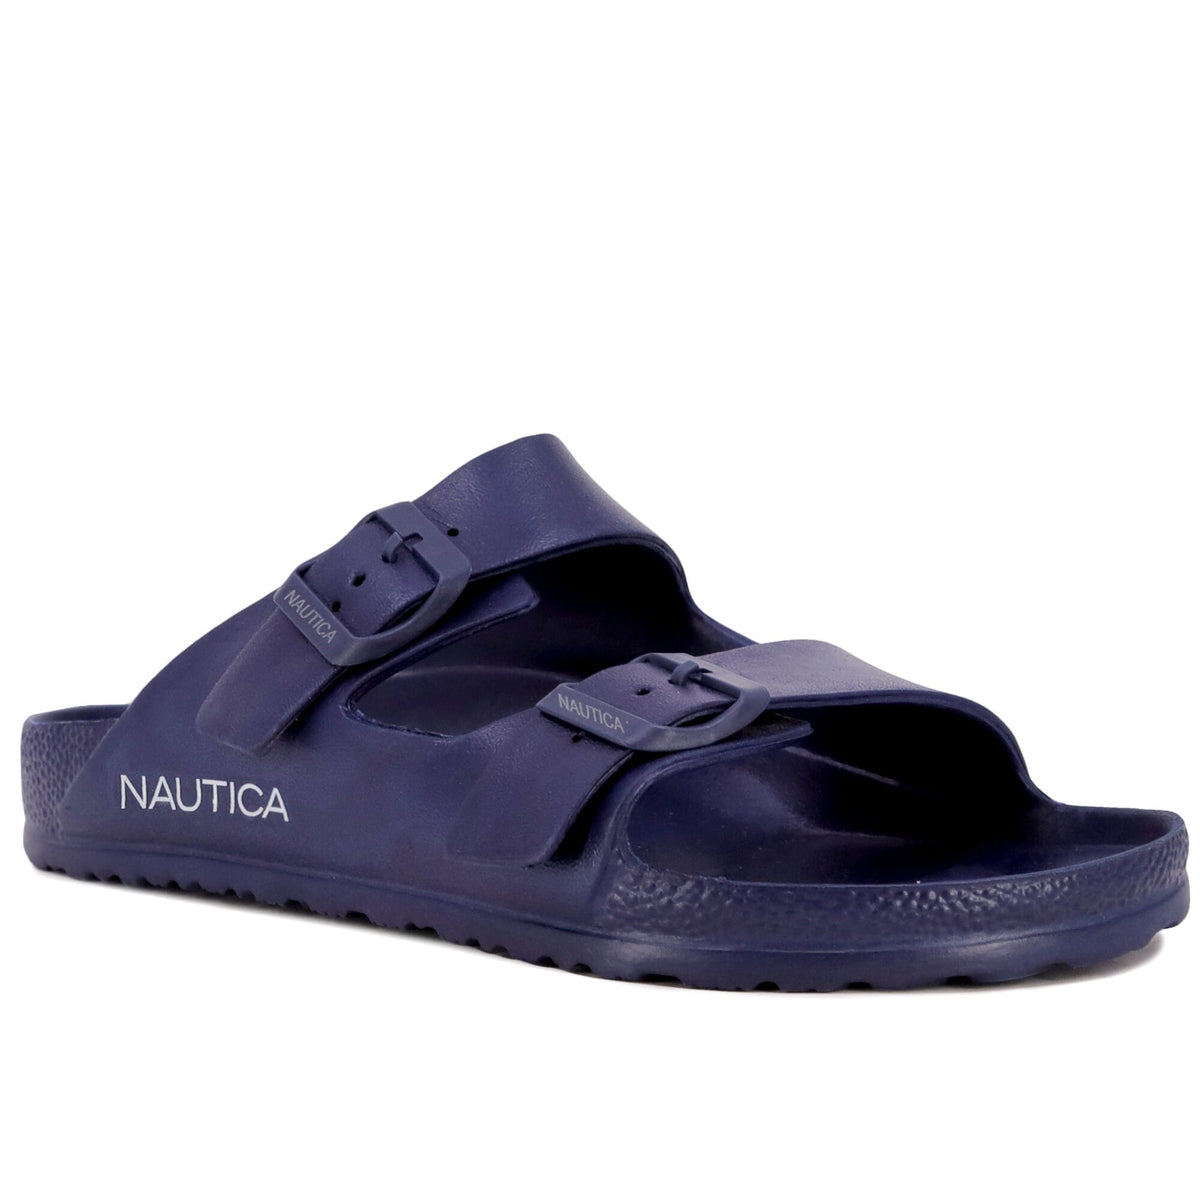 Nautica Men's Buckle Slide Sandal Ice Blue